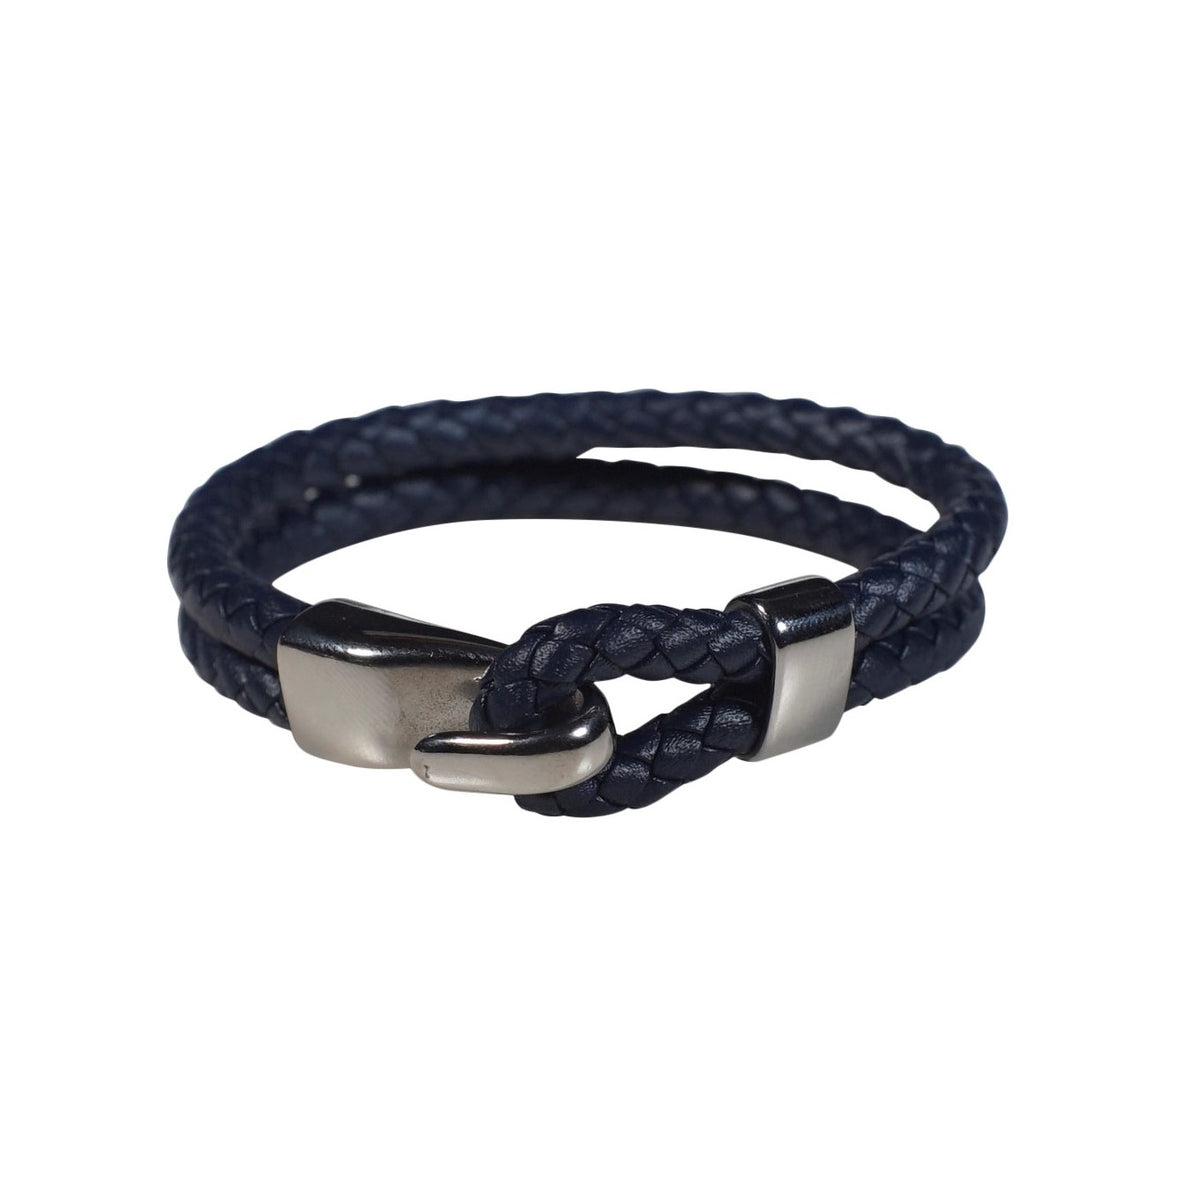 Oxford Leather Bracelet in Navy (Size L) - Nomad watch Works